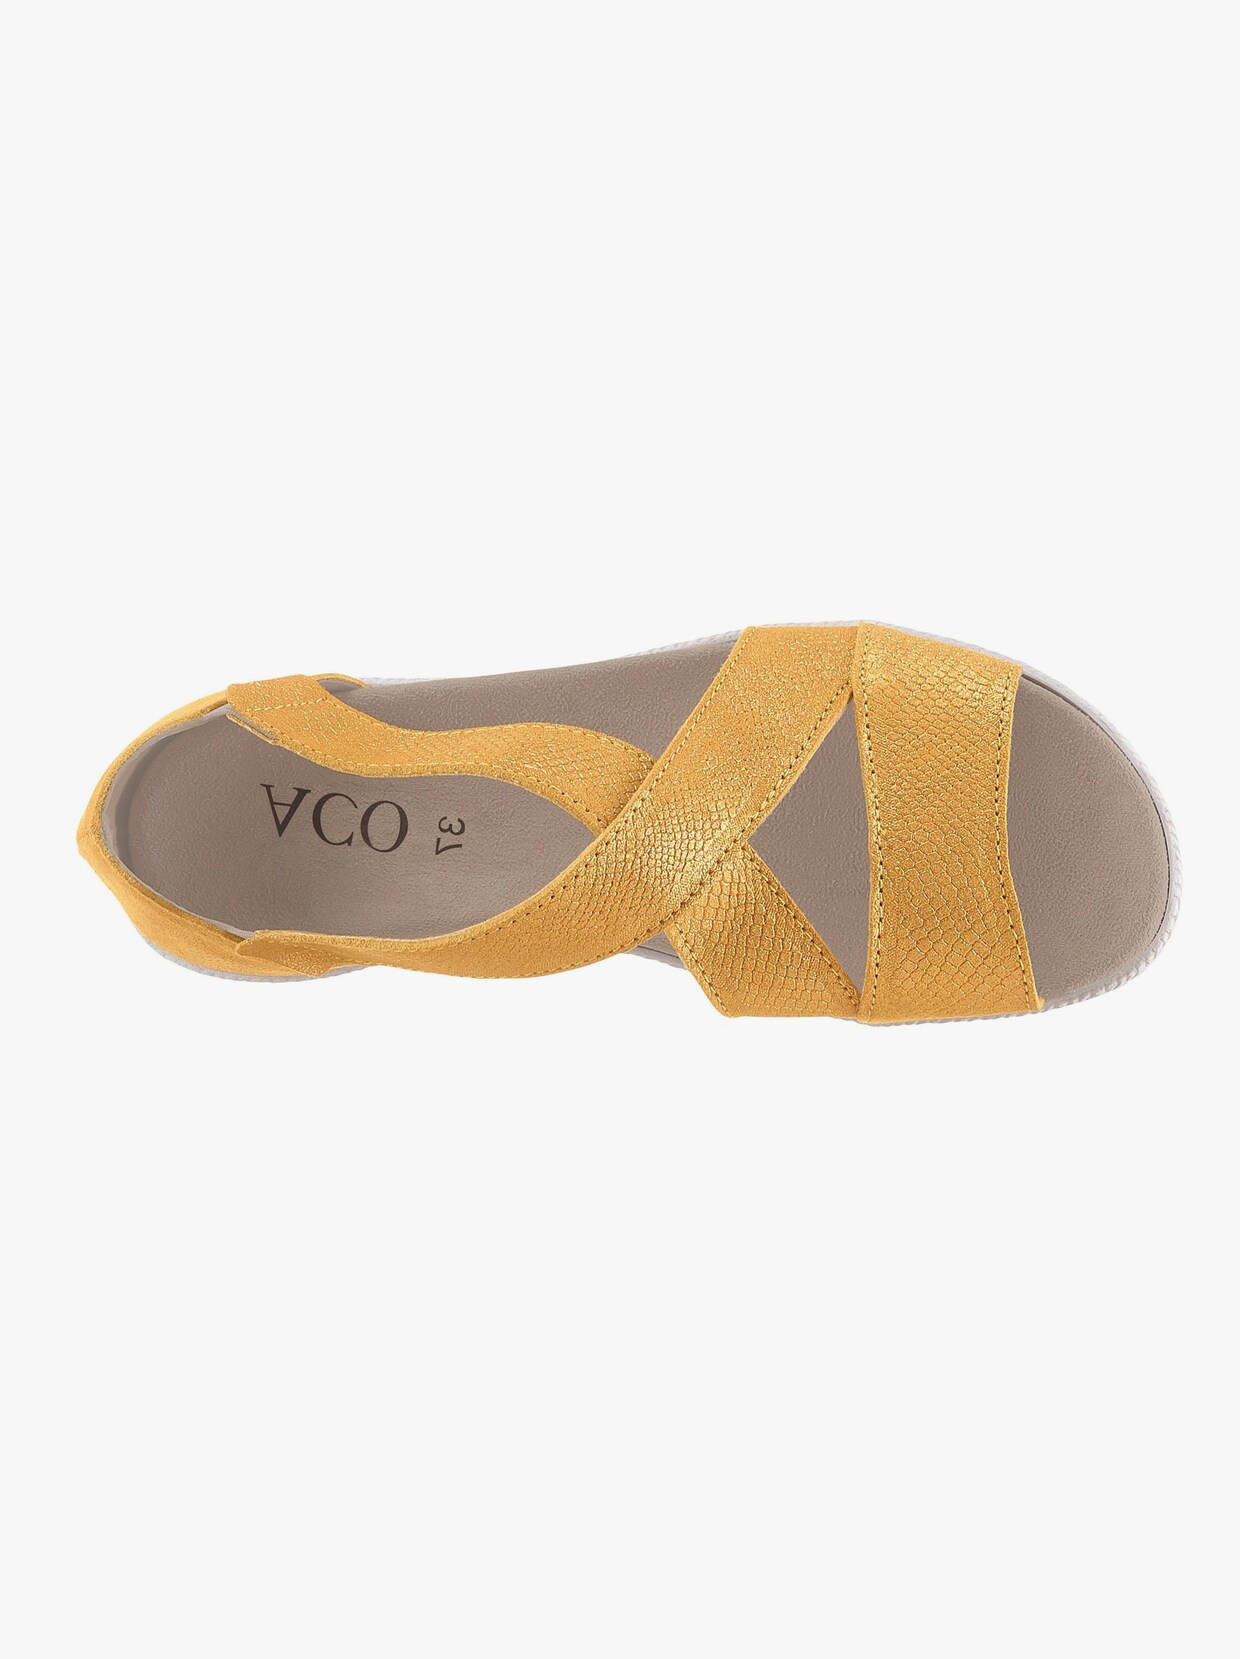 ACO Sandalette - gelb